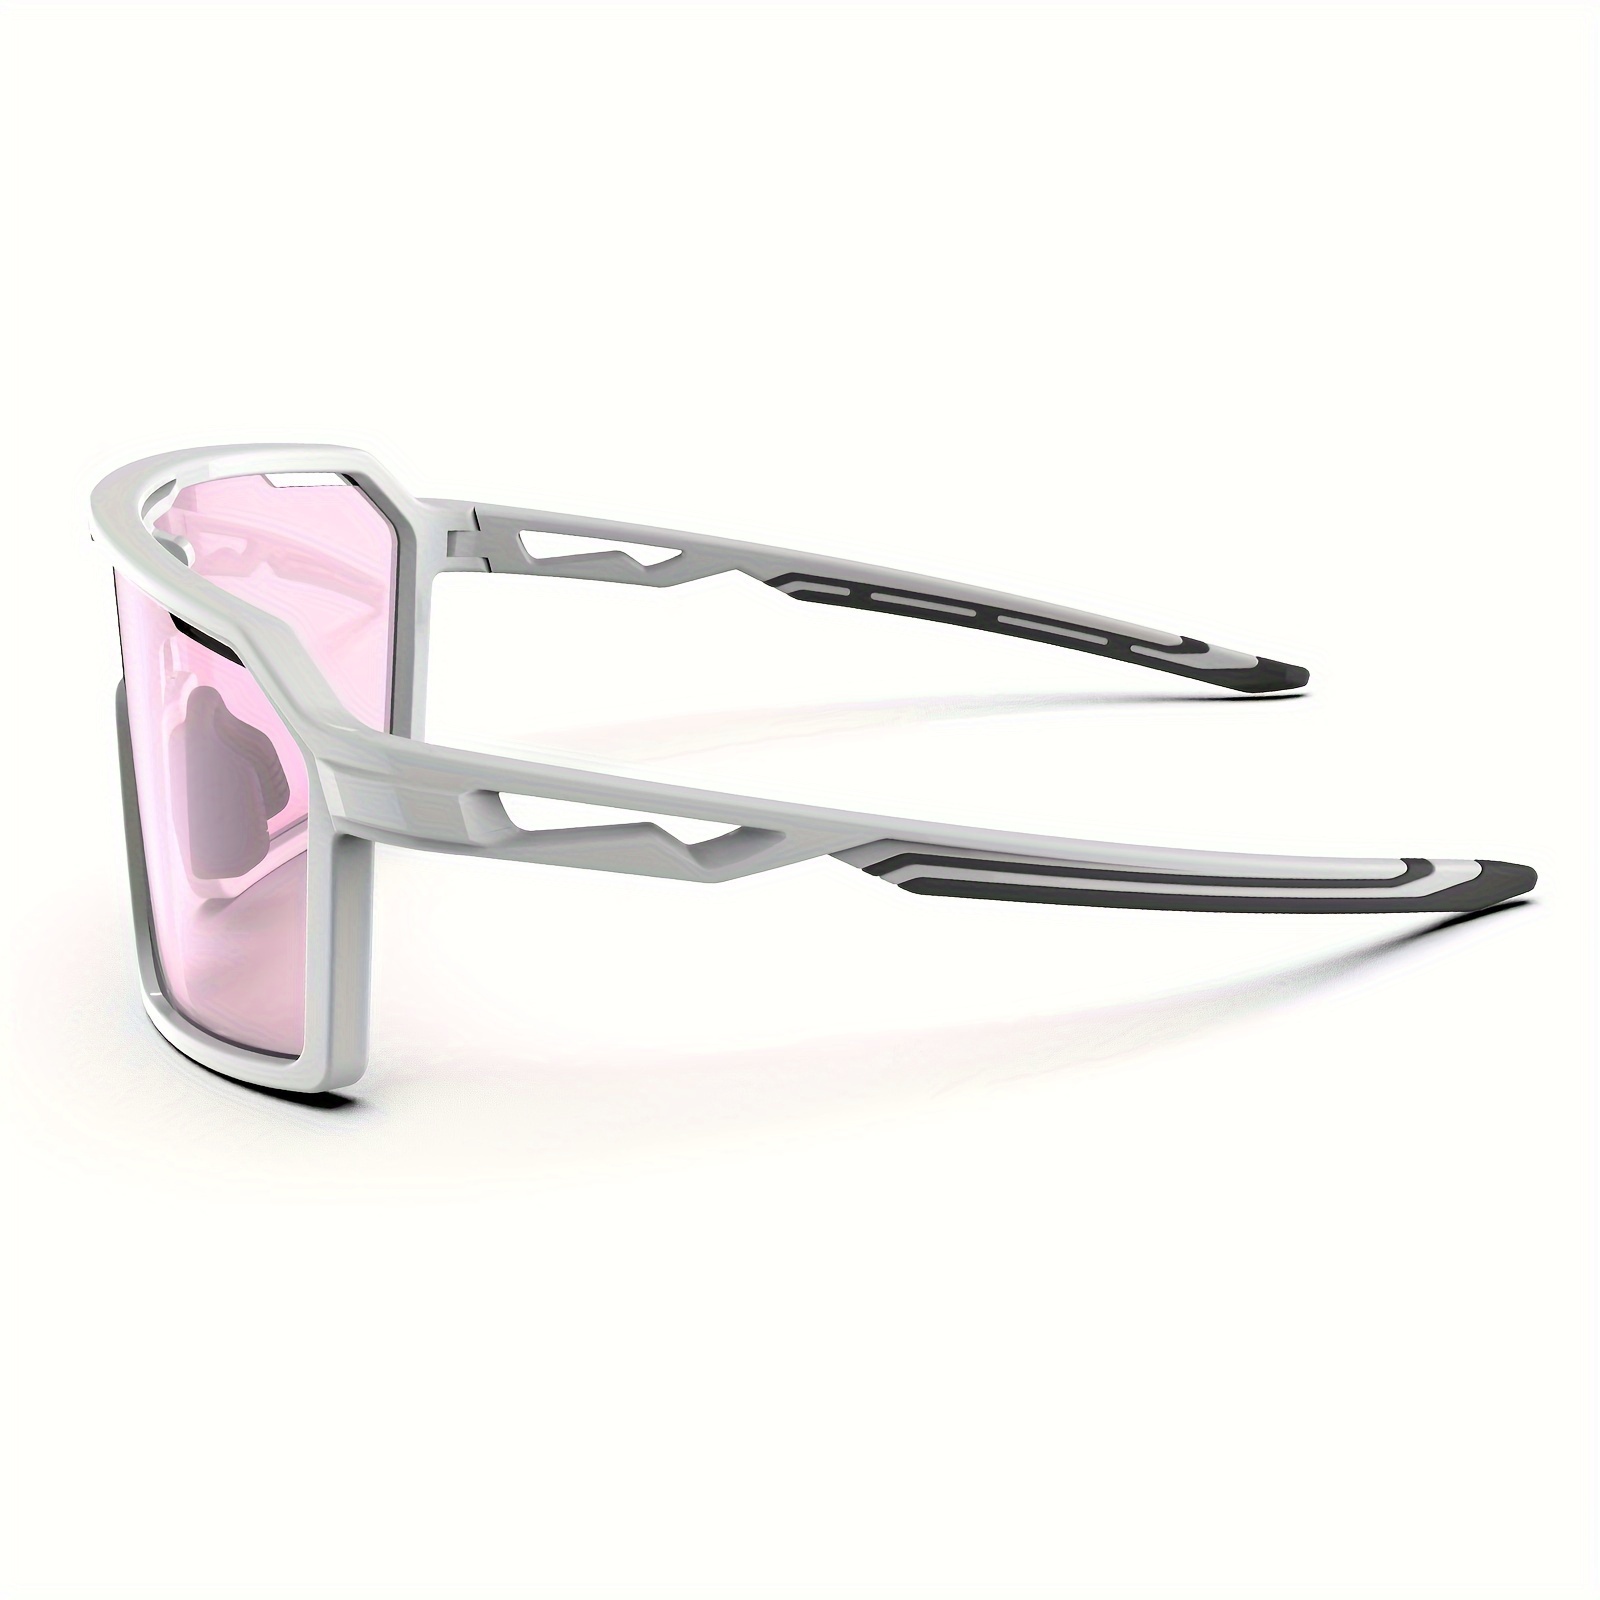 

Haayot Sports Sunglasses For Men Women, Cycling Baseball Fishing Running Biking Glasses